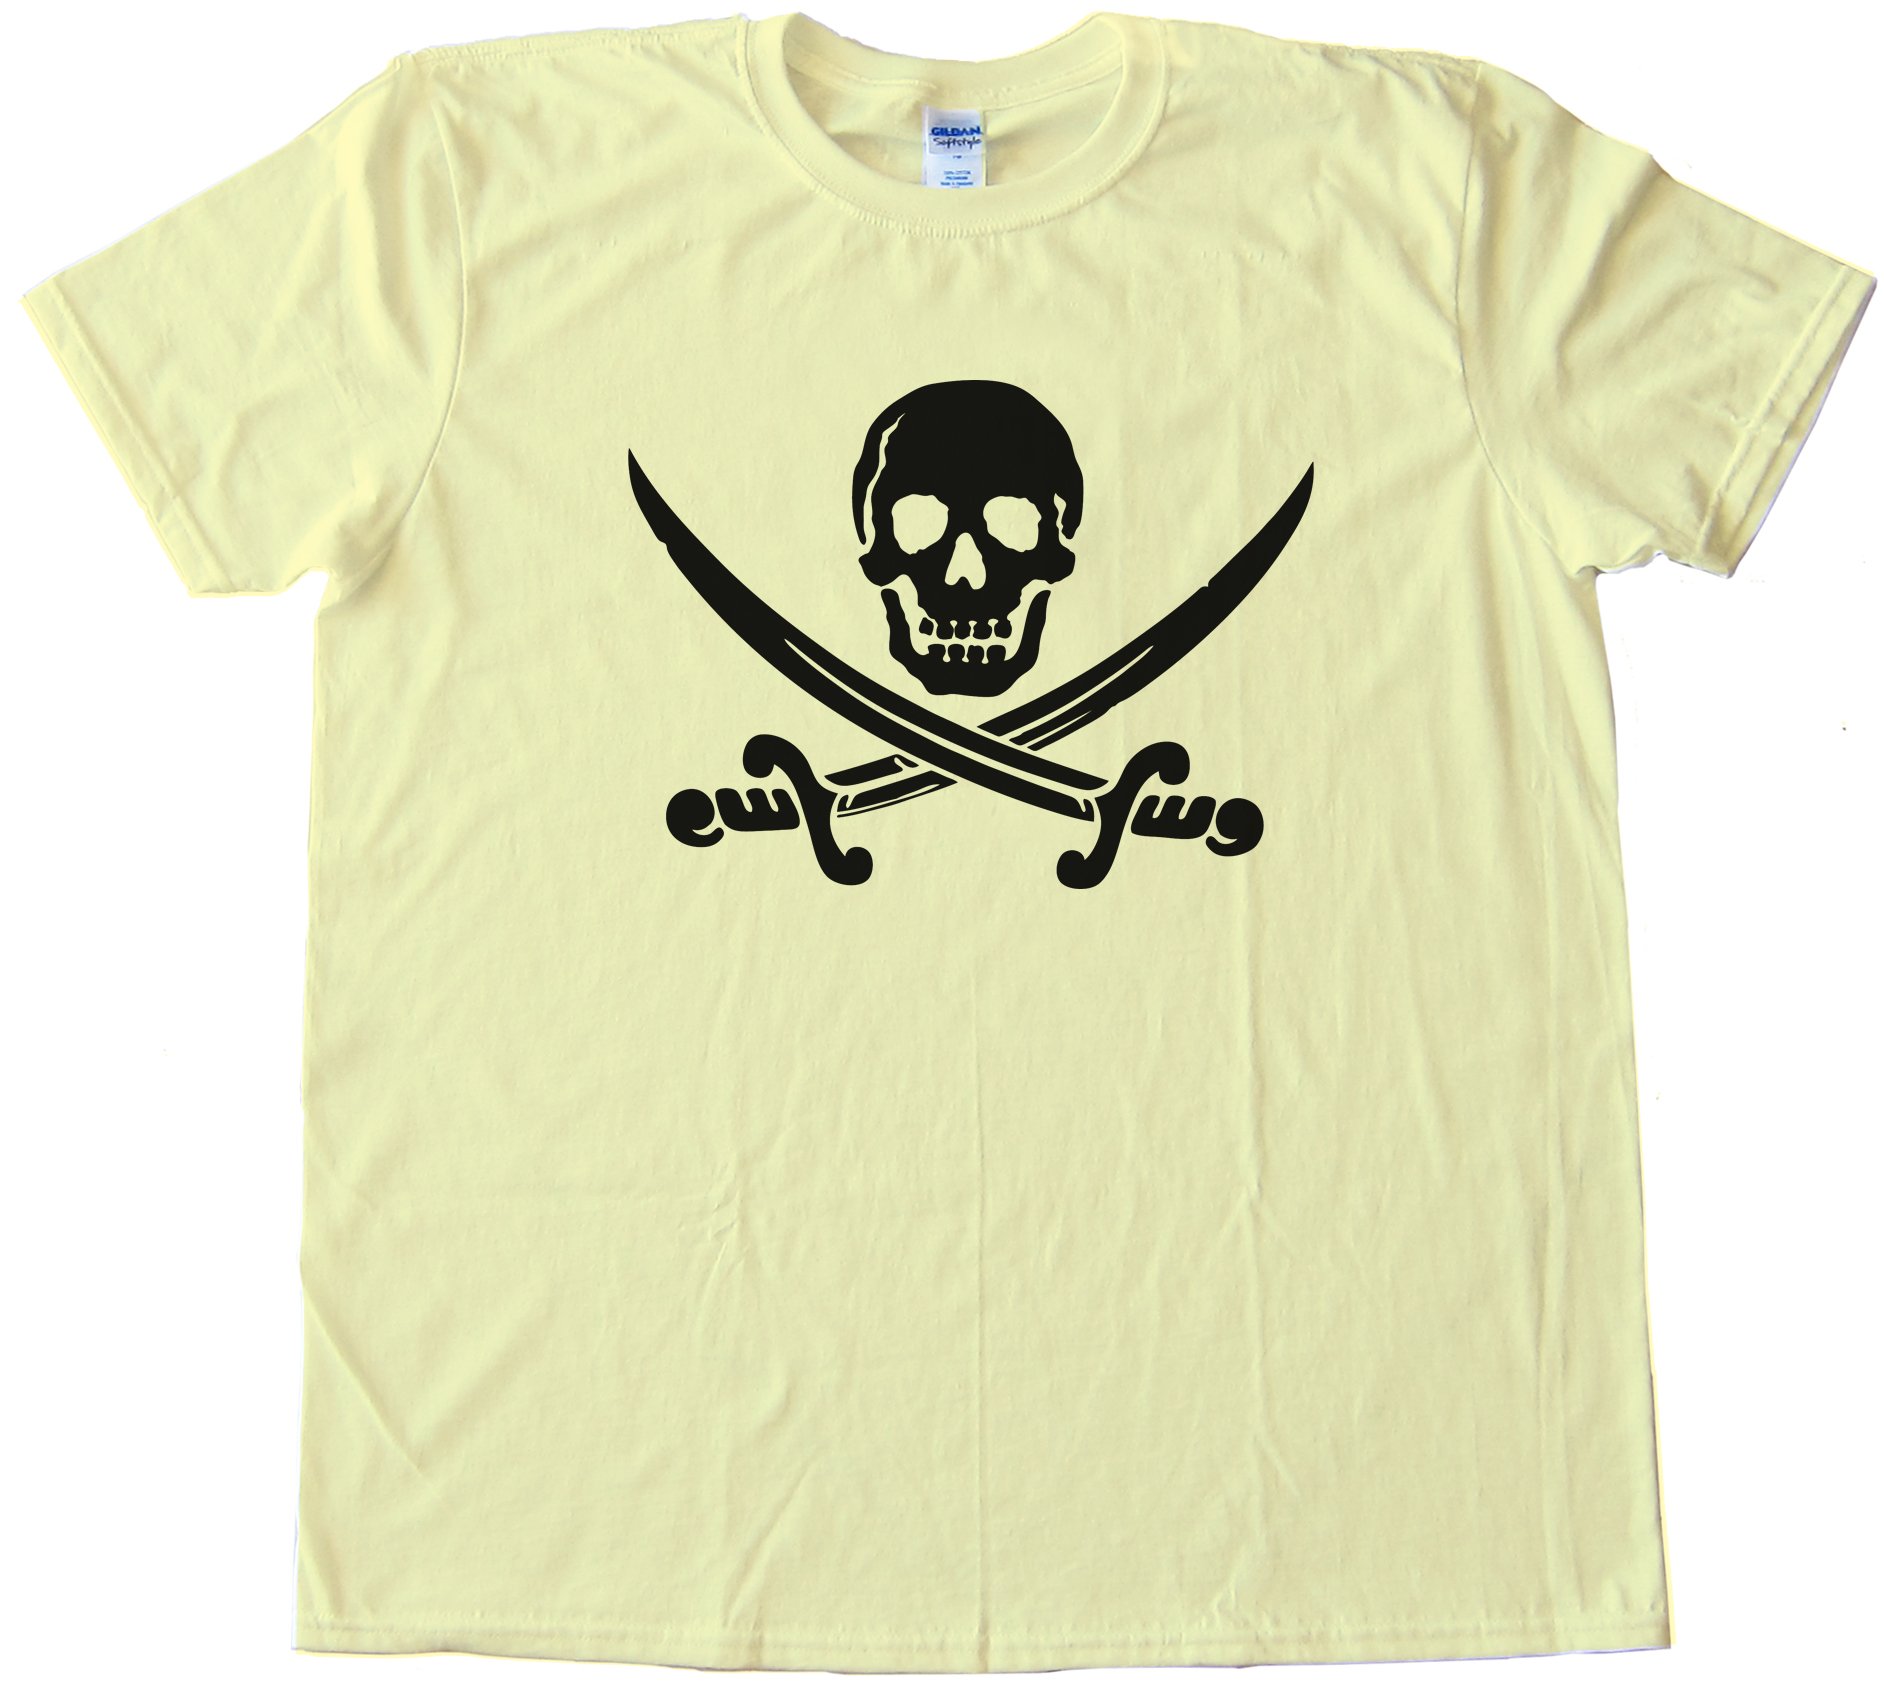 Skull &Amp; Crossbones Swords Pirate Tee Shirt